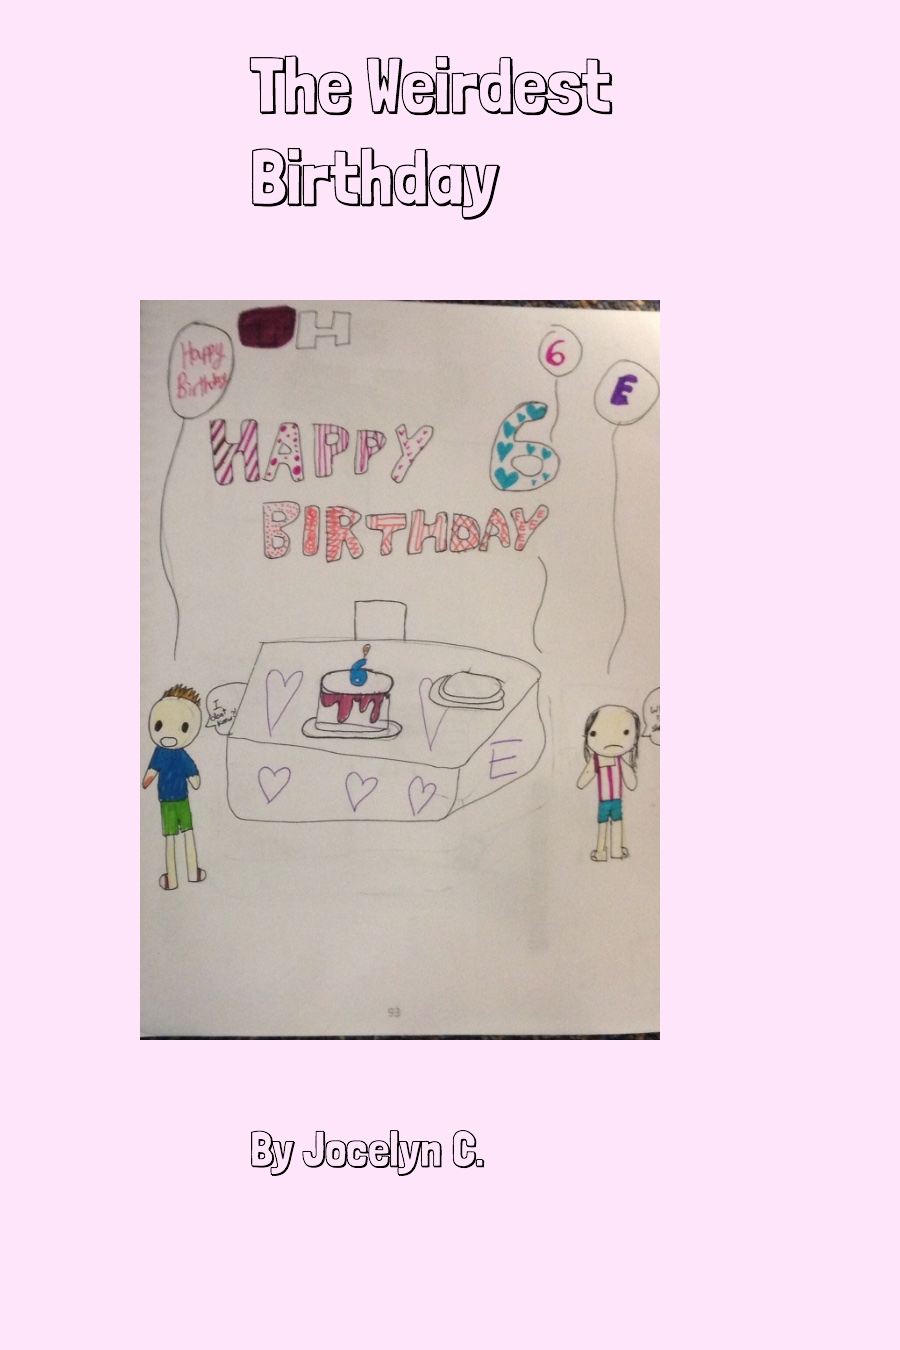 The Weirdest Birthday by Jocelyn C